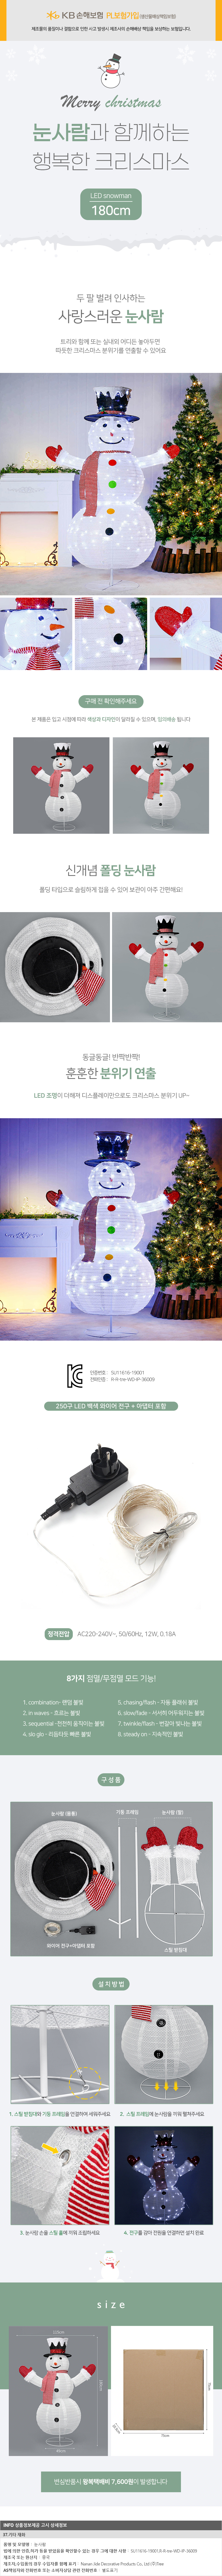 LED 폴딩 눈사람 180cm 강남 크리스마스장식소품